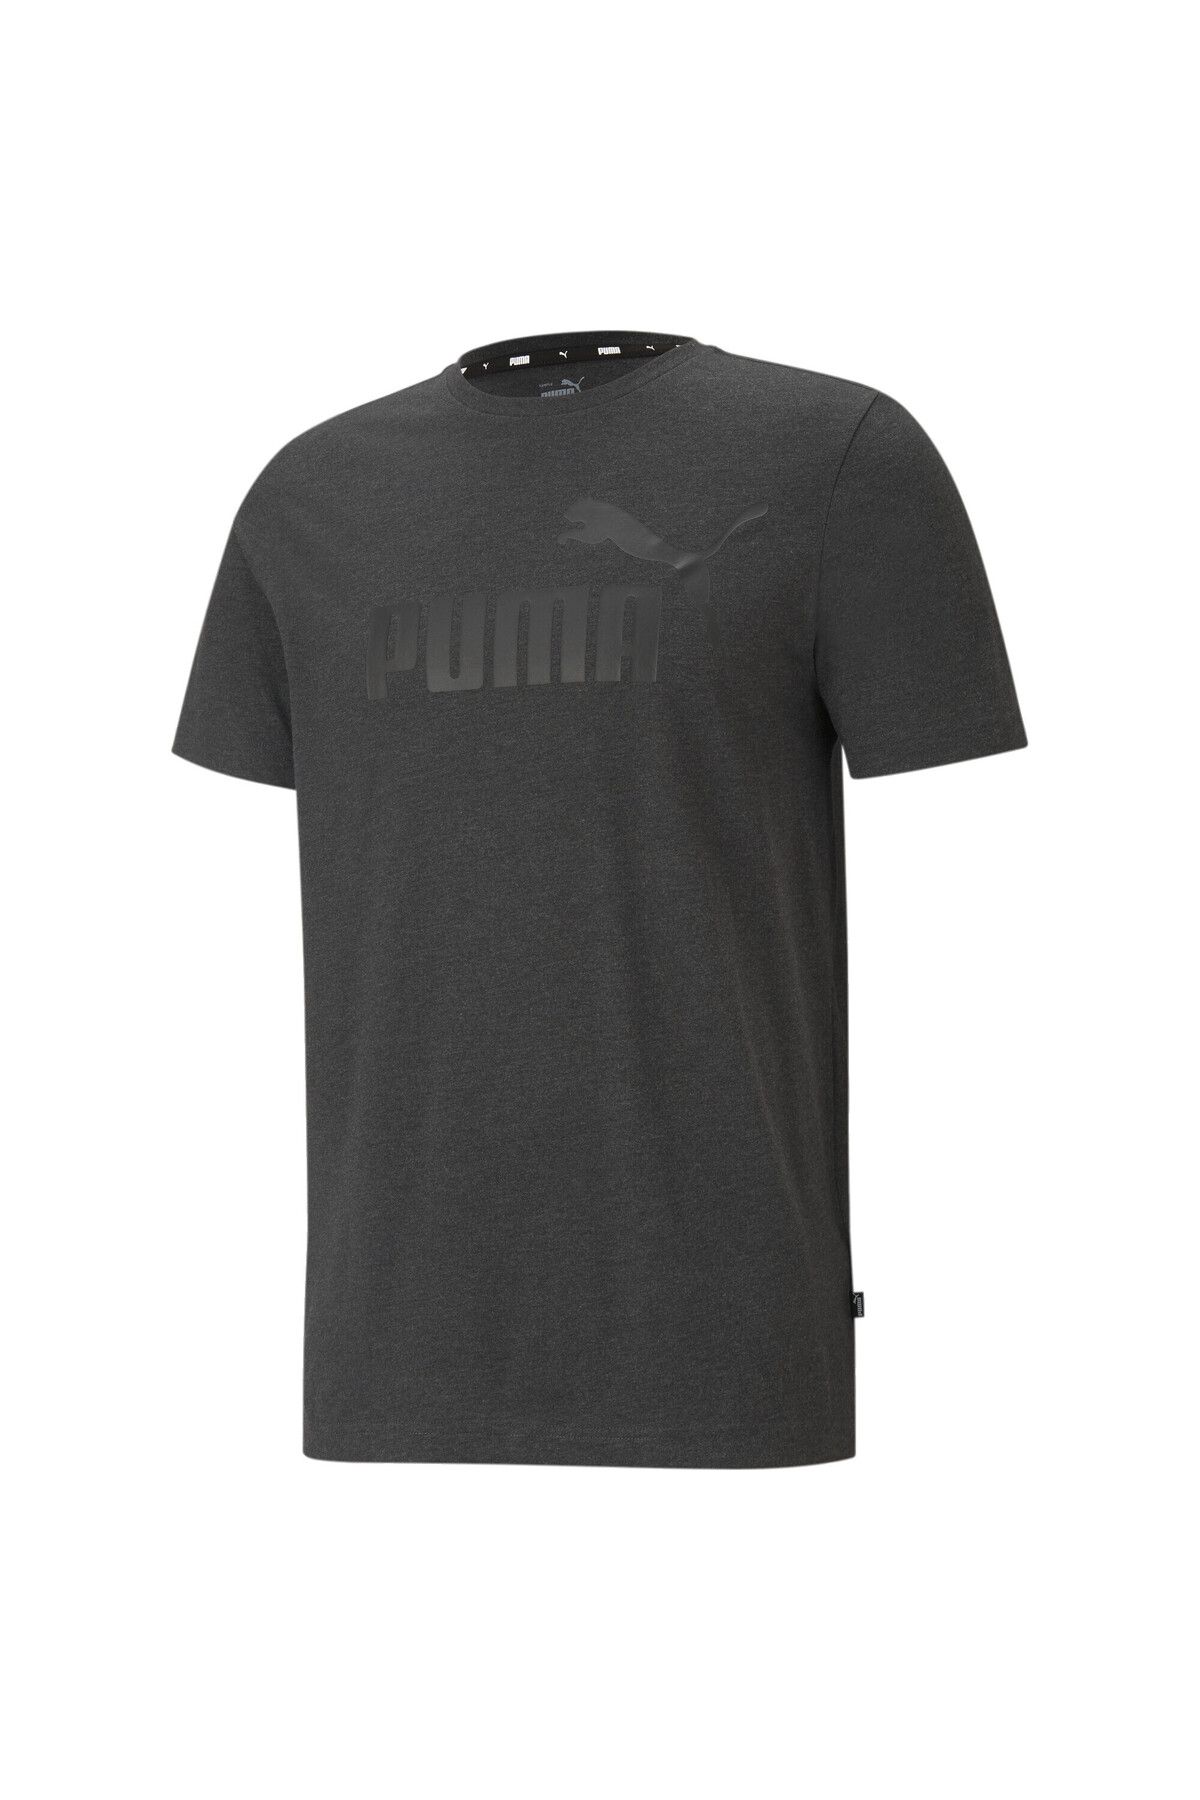 Puma Ess Heather Tee Dark Koyu Gri Erkek/unisex T-shirt